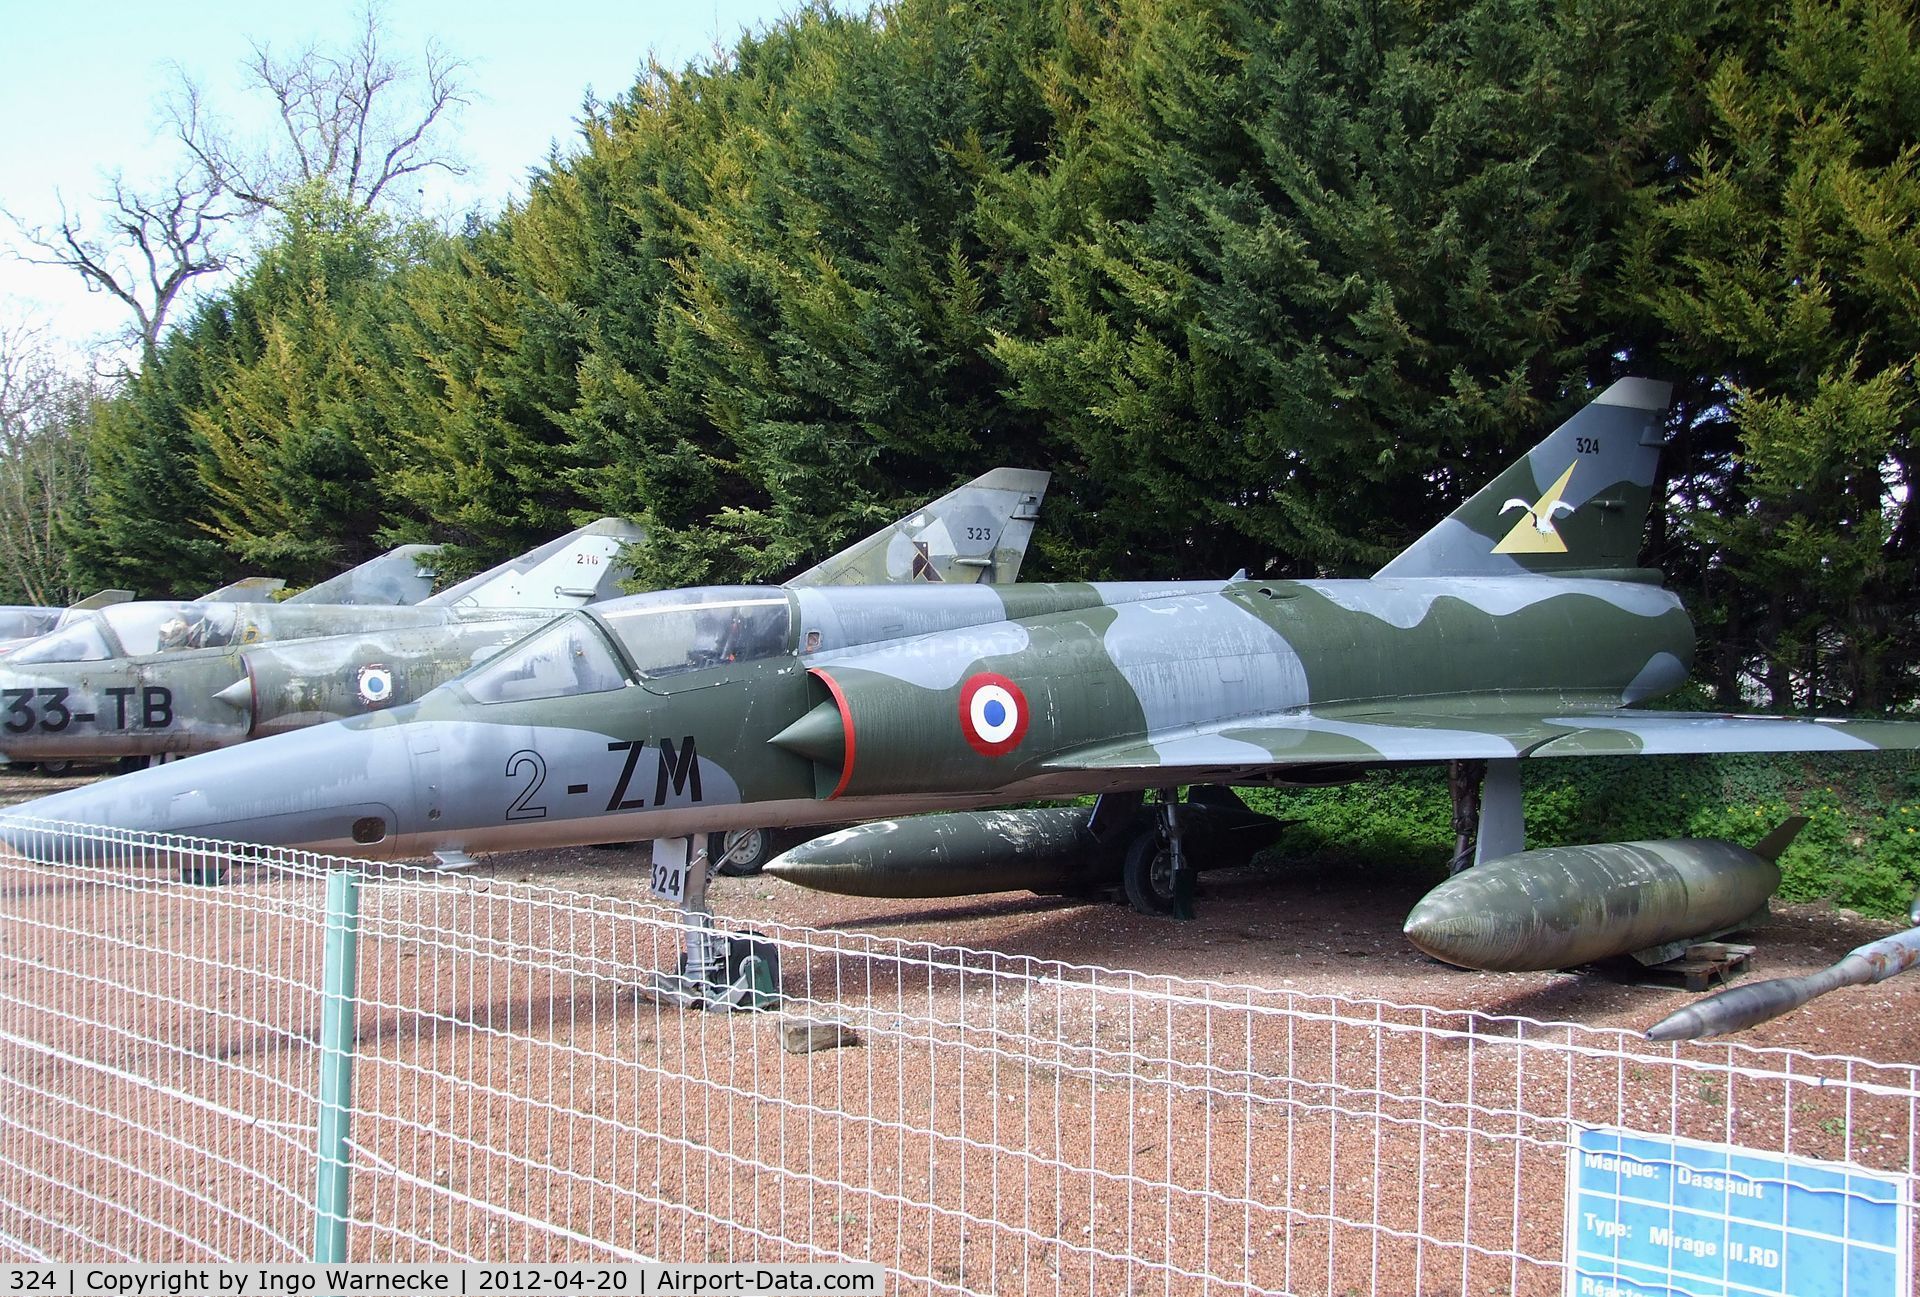 324, Dassault Mirage IIIR C/N 324, Dassault Mirage III R at the Musee de l'Aviation du Chateau, Savigny-les-Beaune